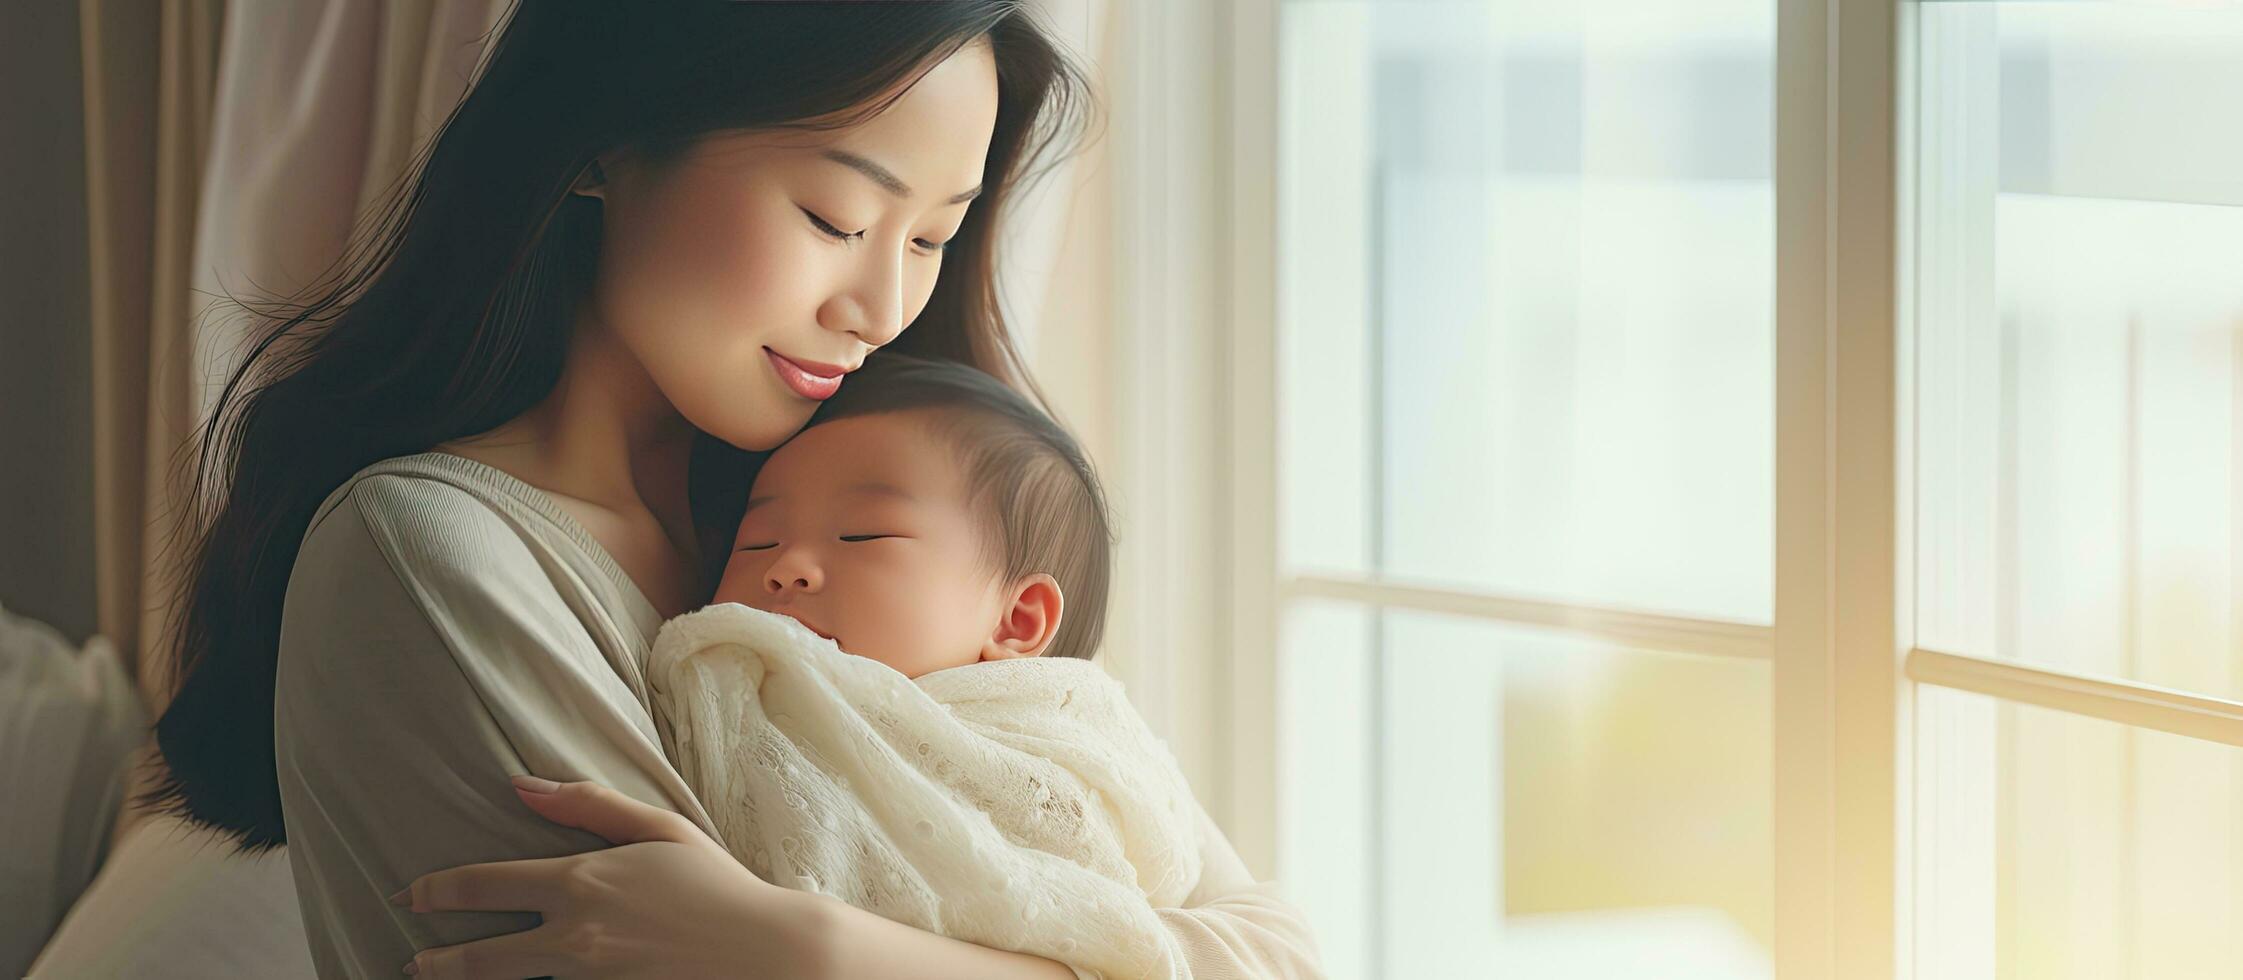 contento asiático madre participación soñoliento infantil por ventana a hogar bebé abrazado en padre s brazos madre conmovedor bebé a dormir foto